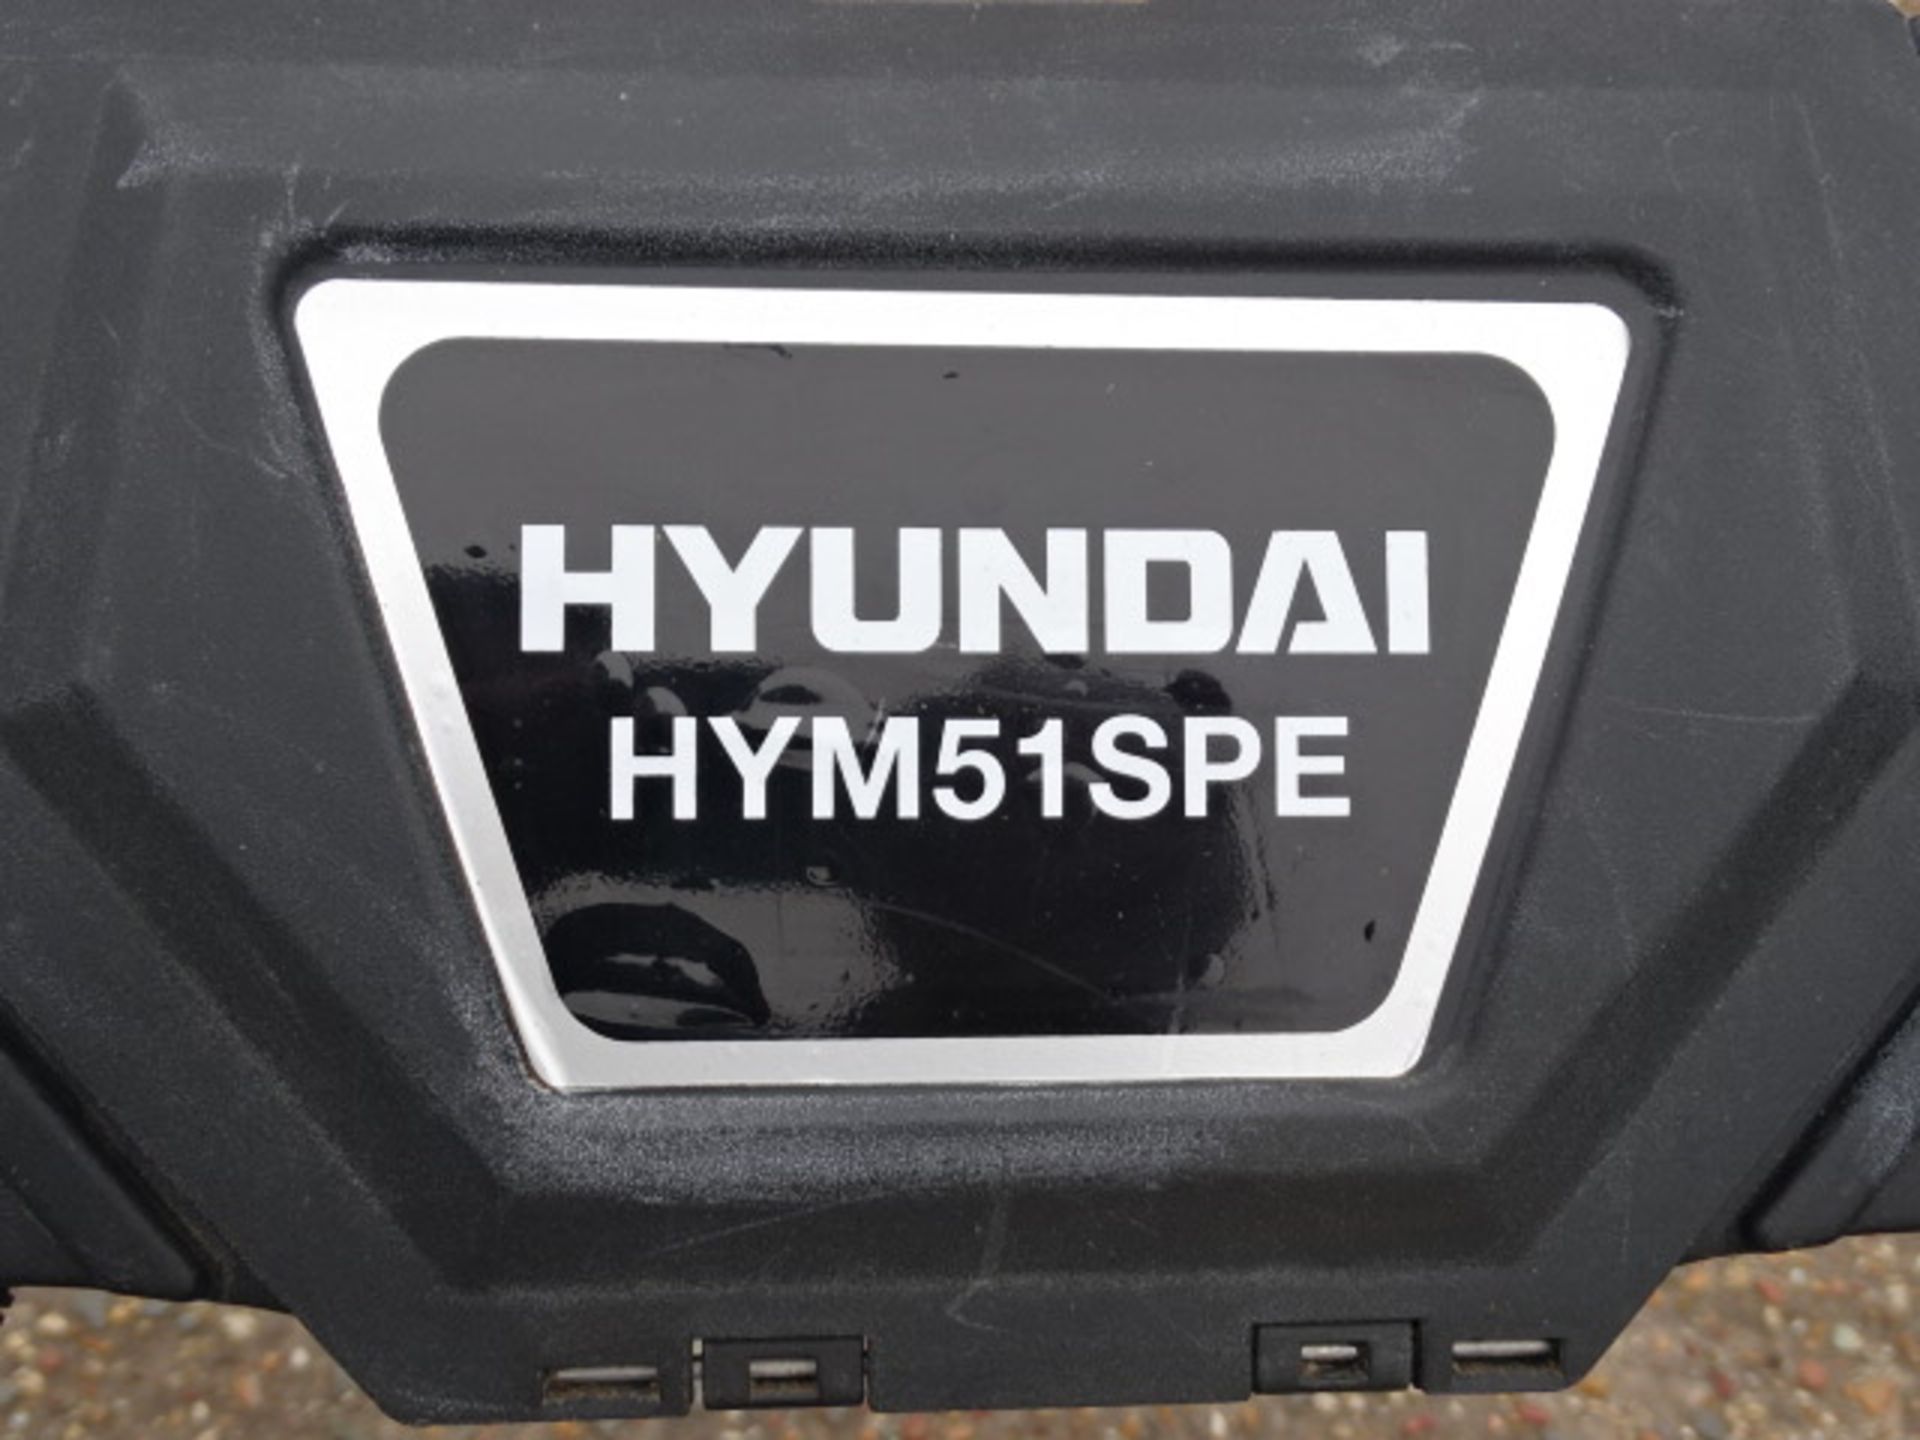 Hyundai petrol electric key start lawnmower (starts but does not self propel) - Image 5 of 10